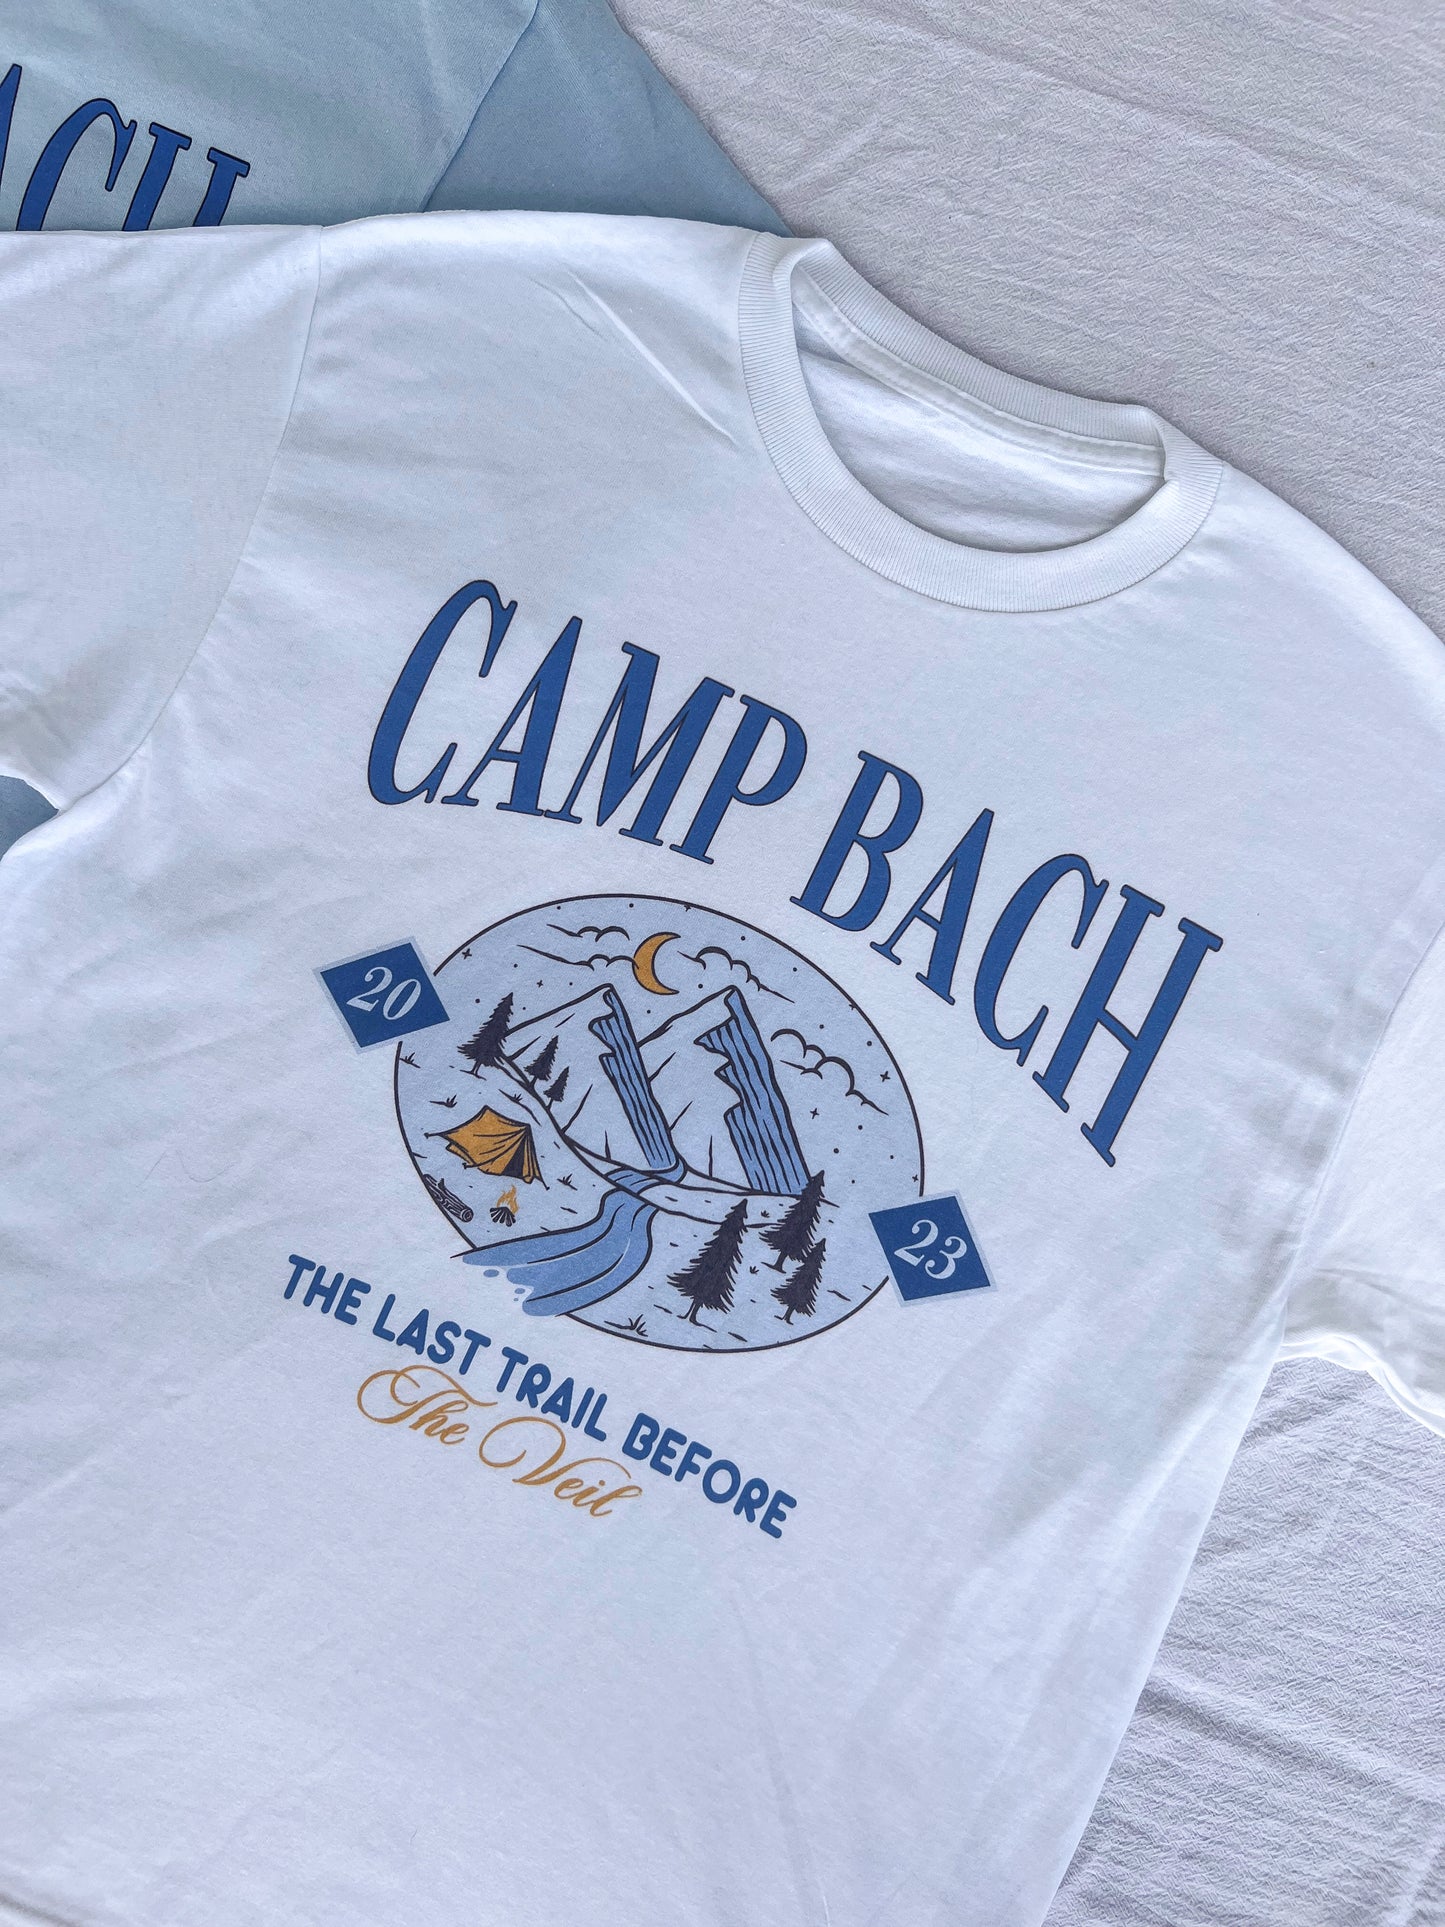 Camp Bach Bachelorette Party Tees